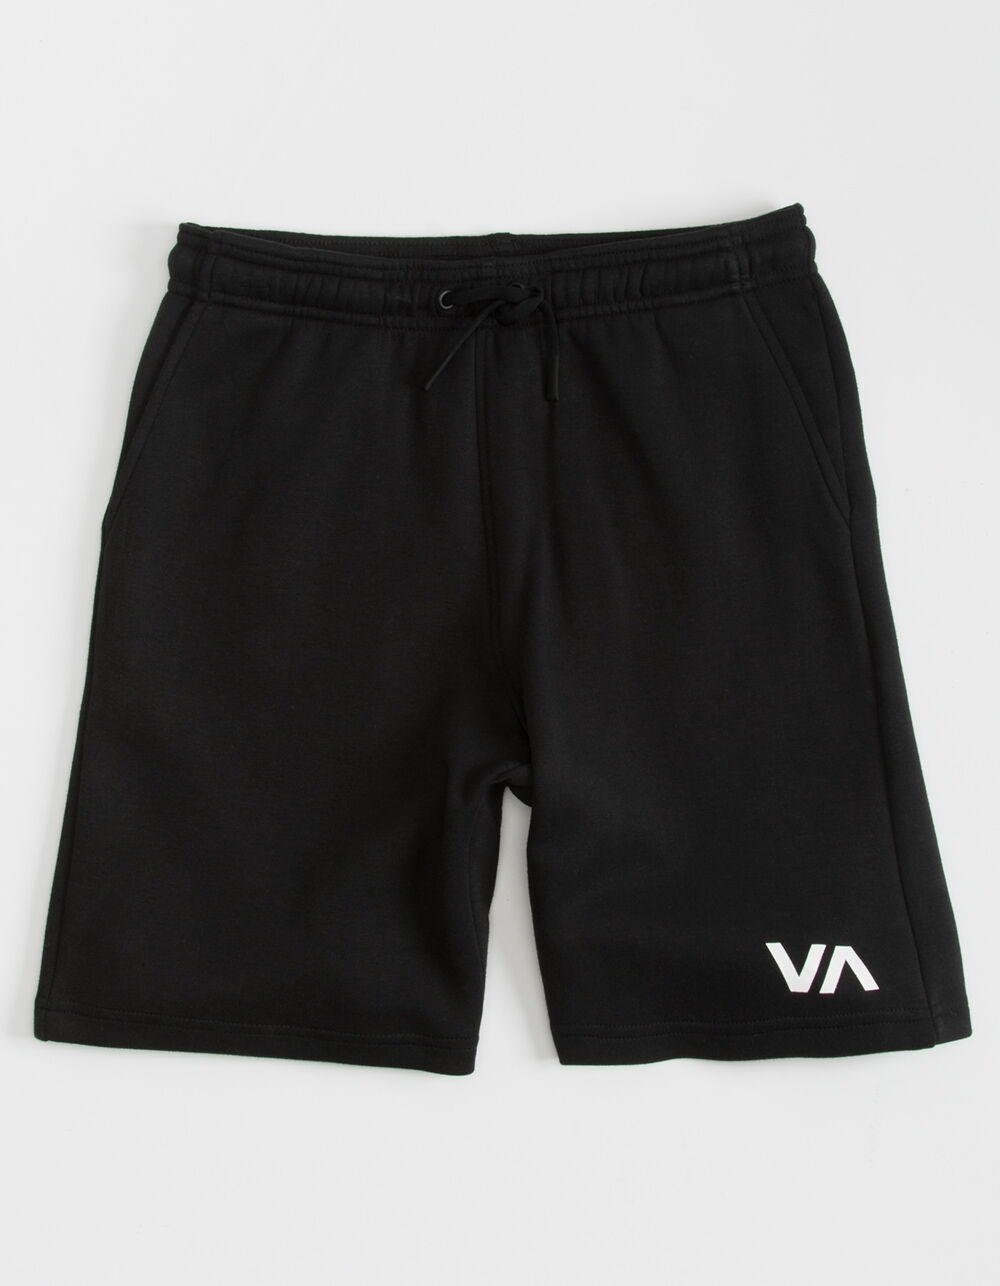 RVCA VA Sport IV Boys Black Sweat Shorts